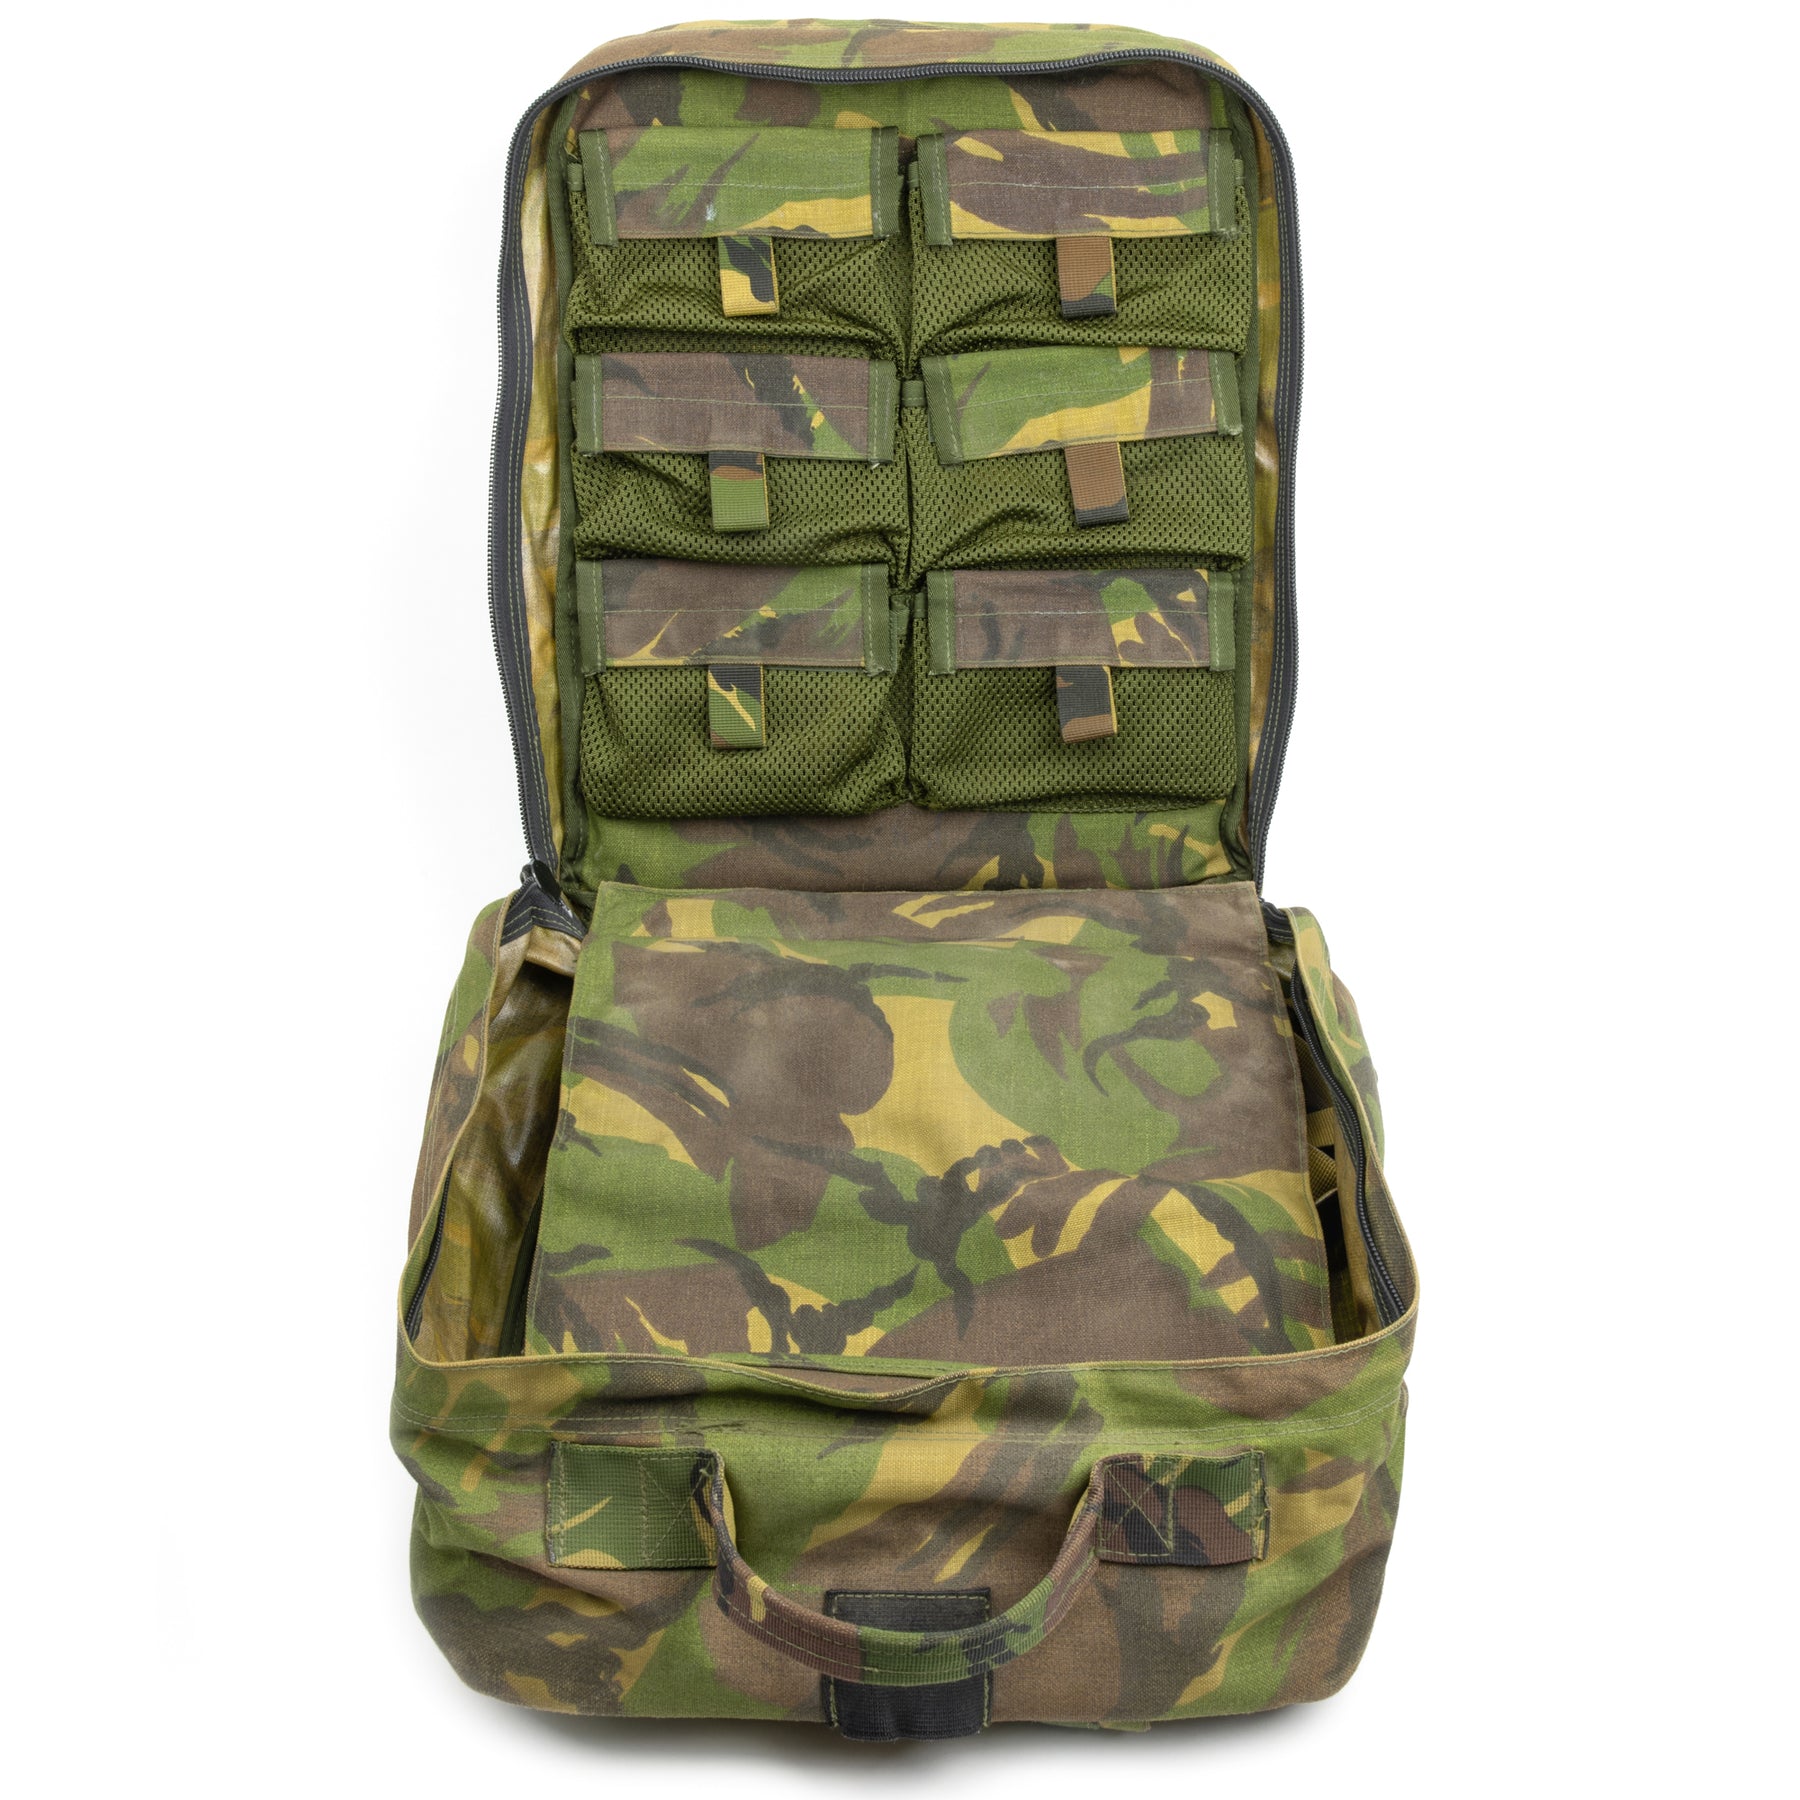 Dutch Army Woodland Used Medic Backpack